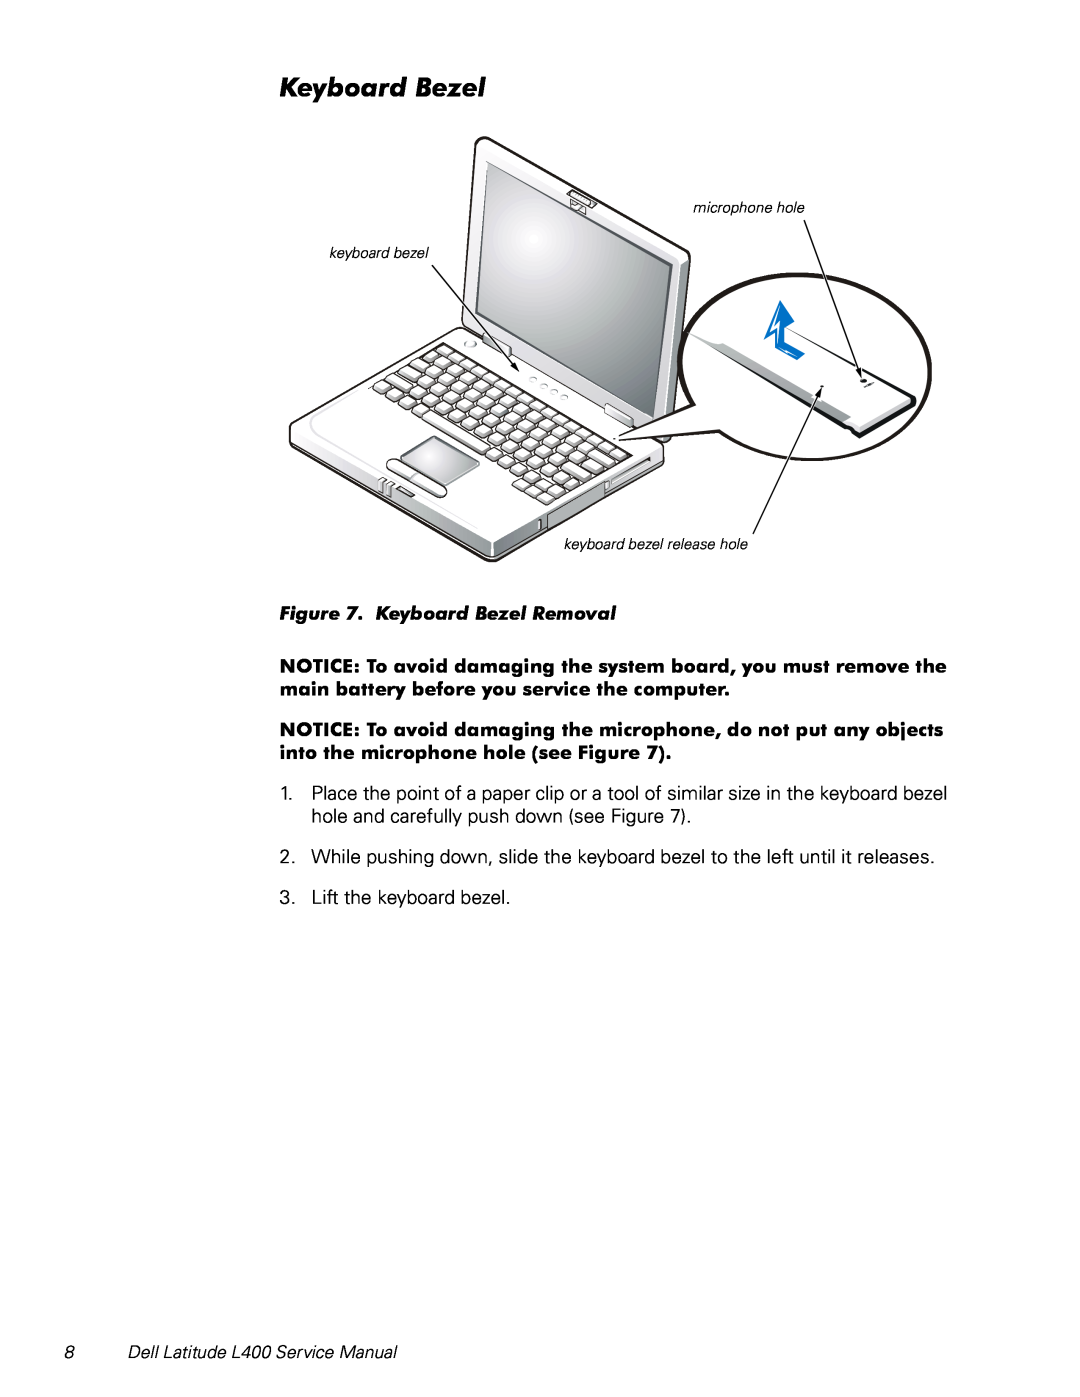 Dell L400 service manual Keyboard Bezel Removal 